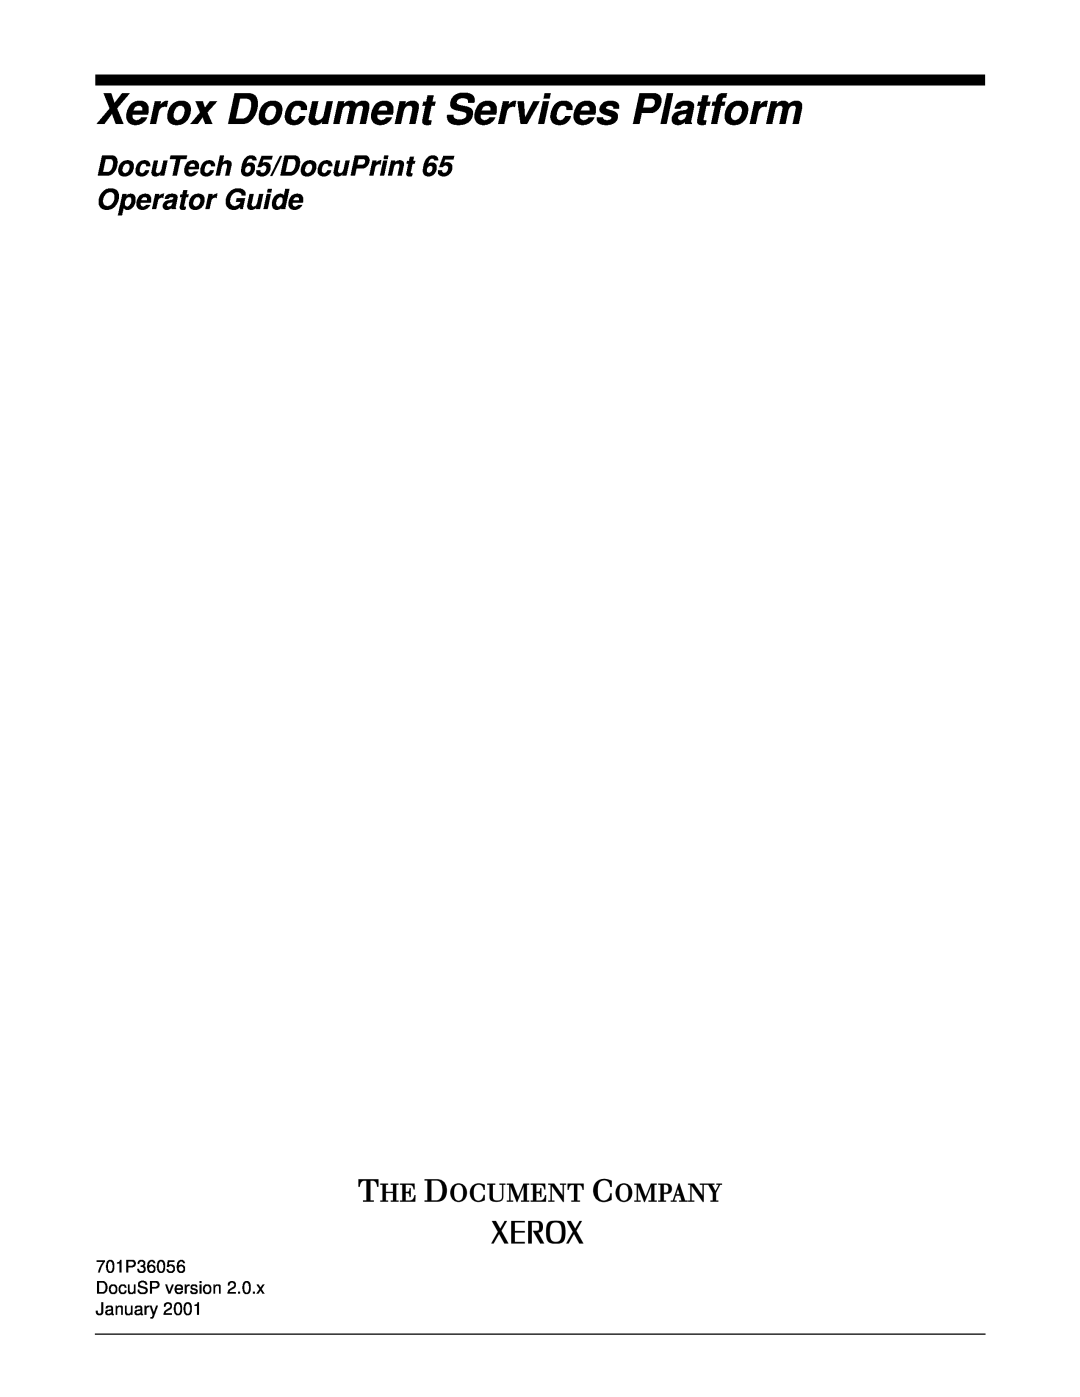 Xerox DOCUTECH 65 manual Xerox Document Services Platform, DocuTech 65/DocuPrint Operator Guide 